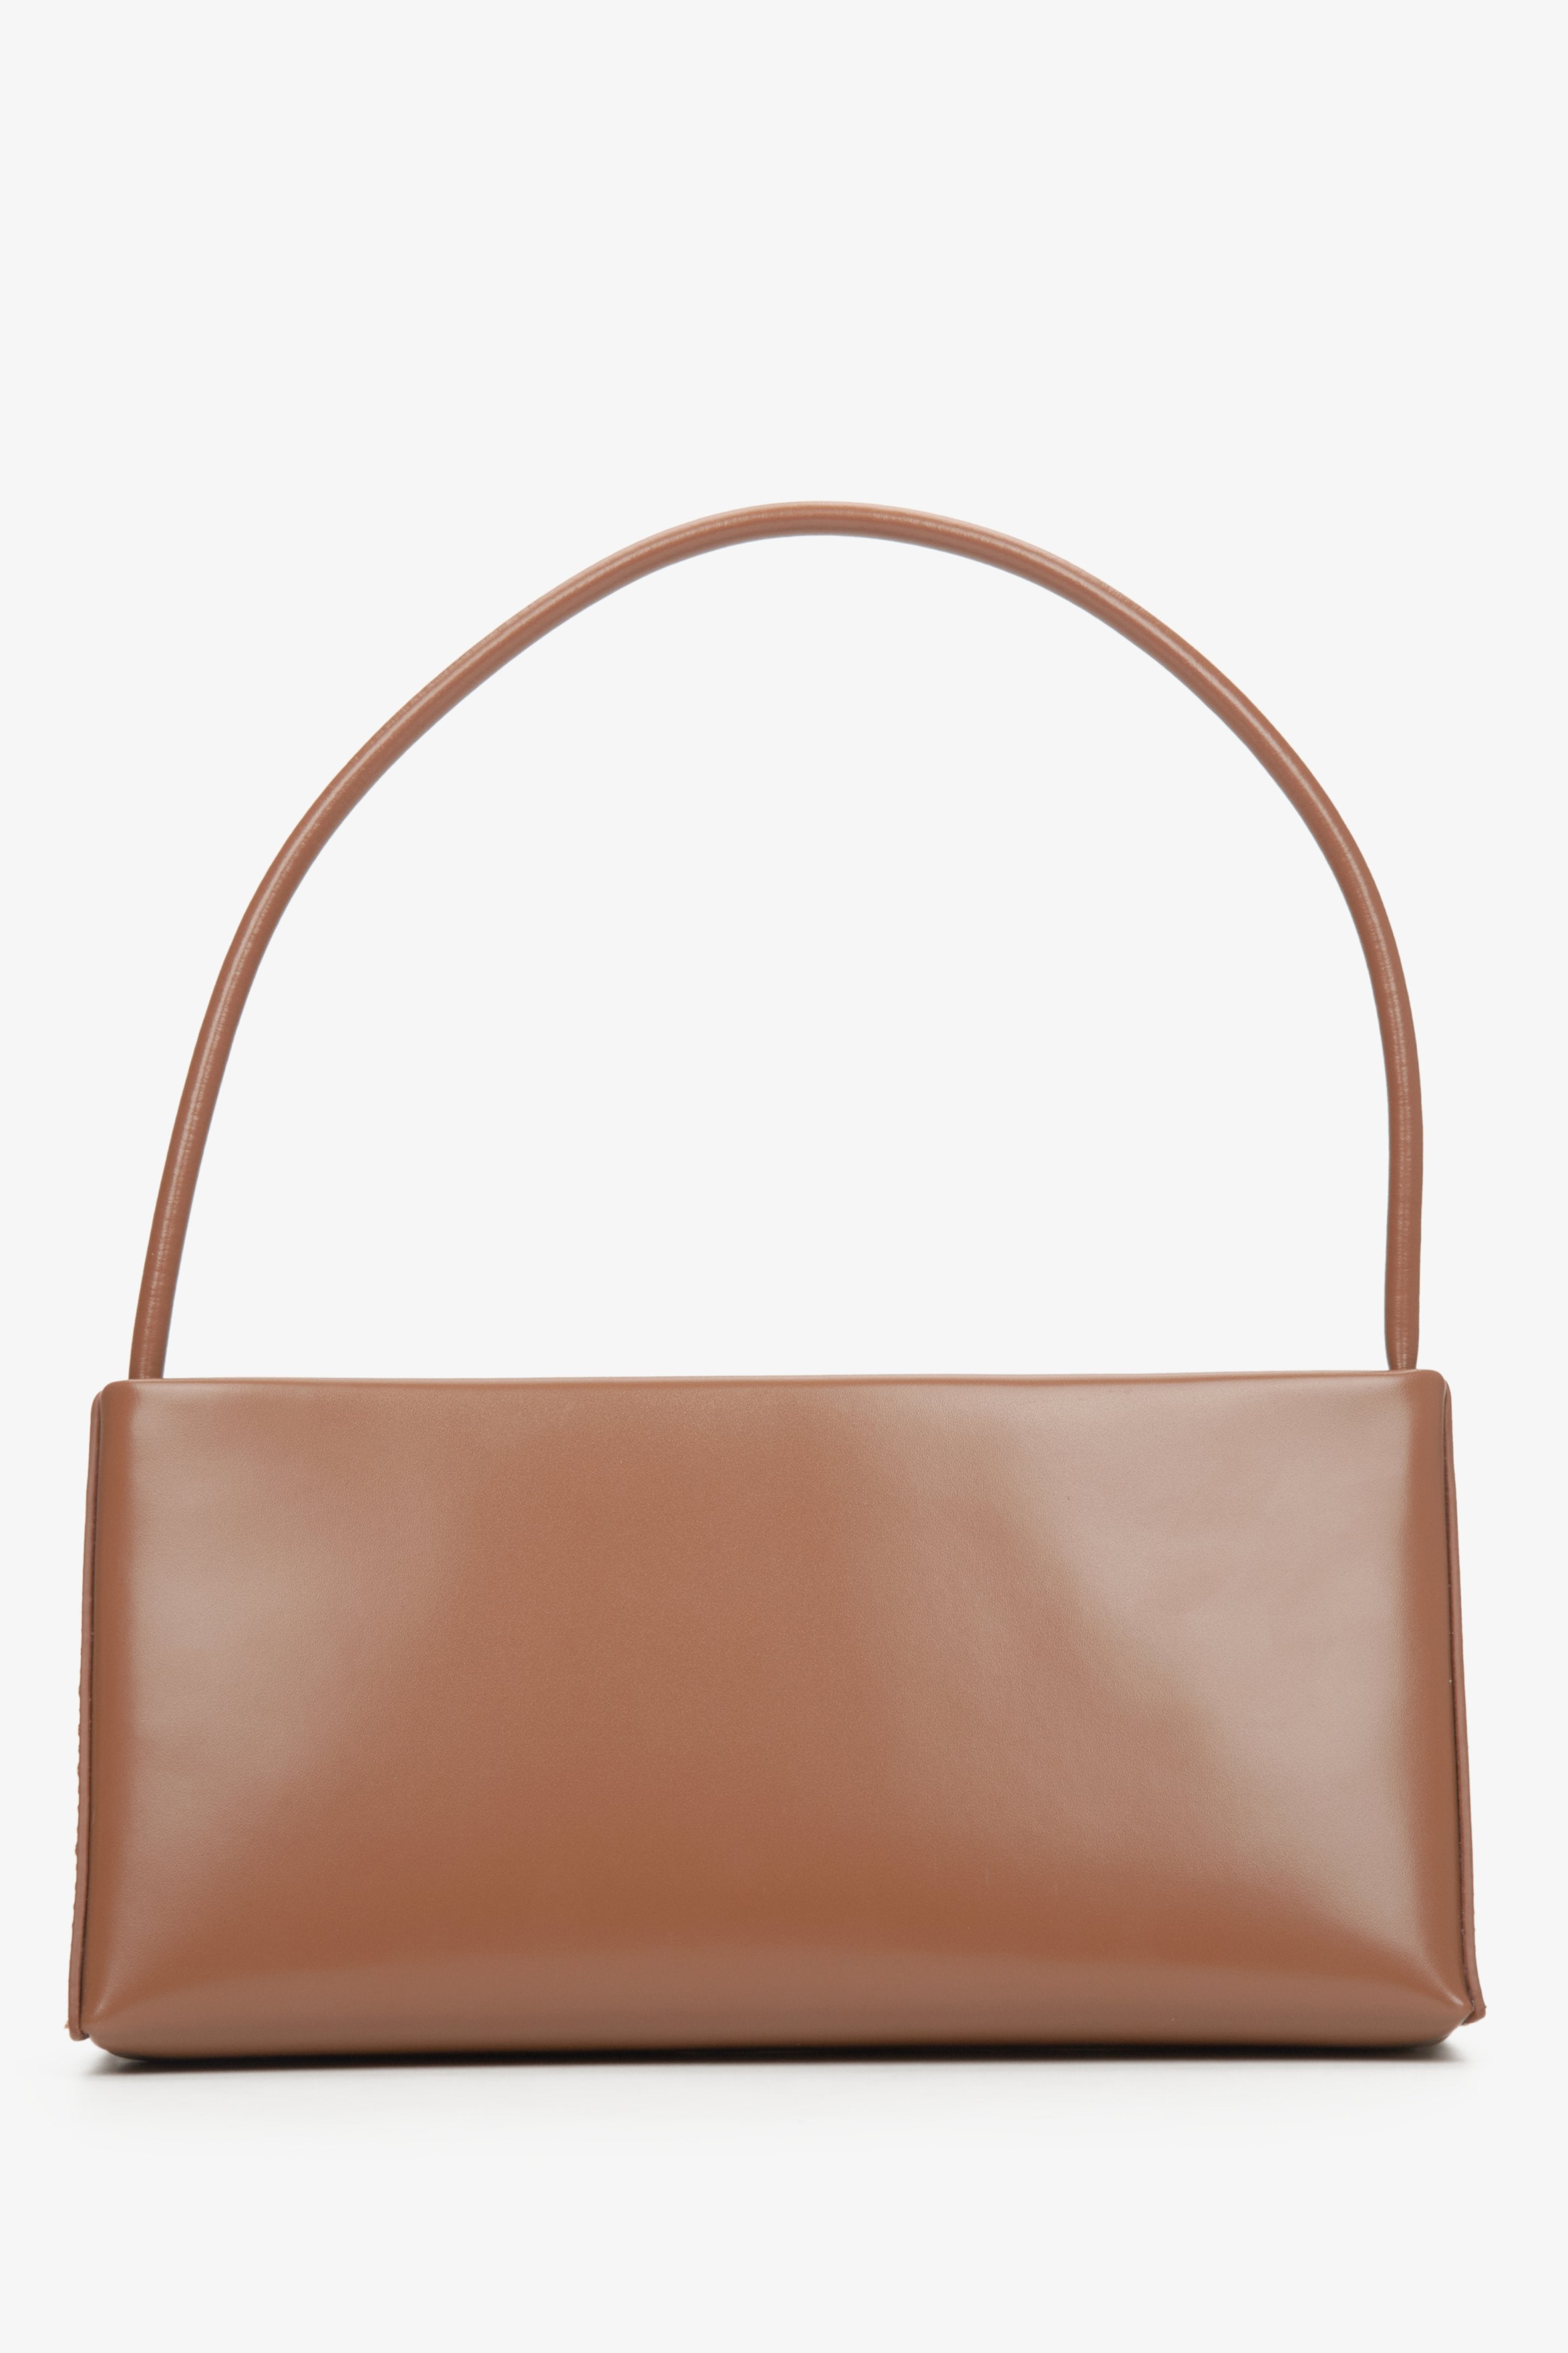 Brown leather women's handbag - reverse.